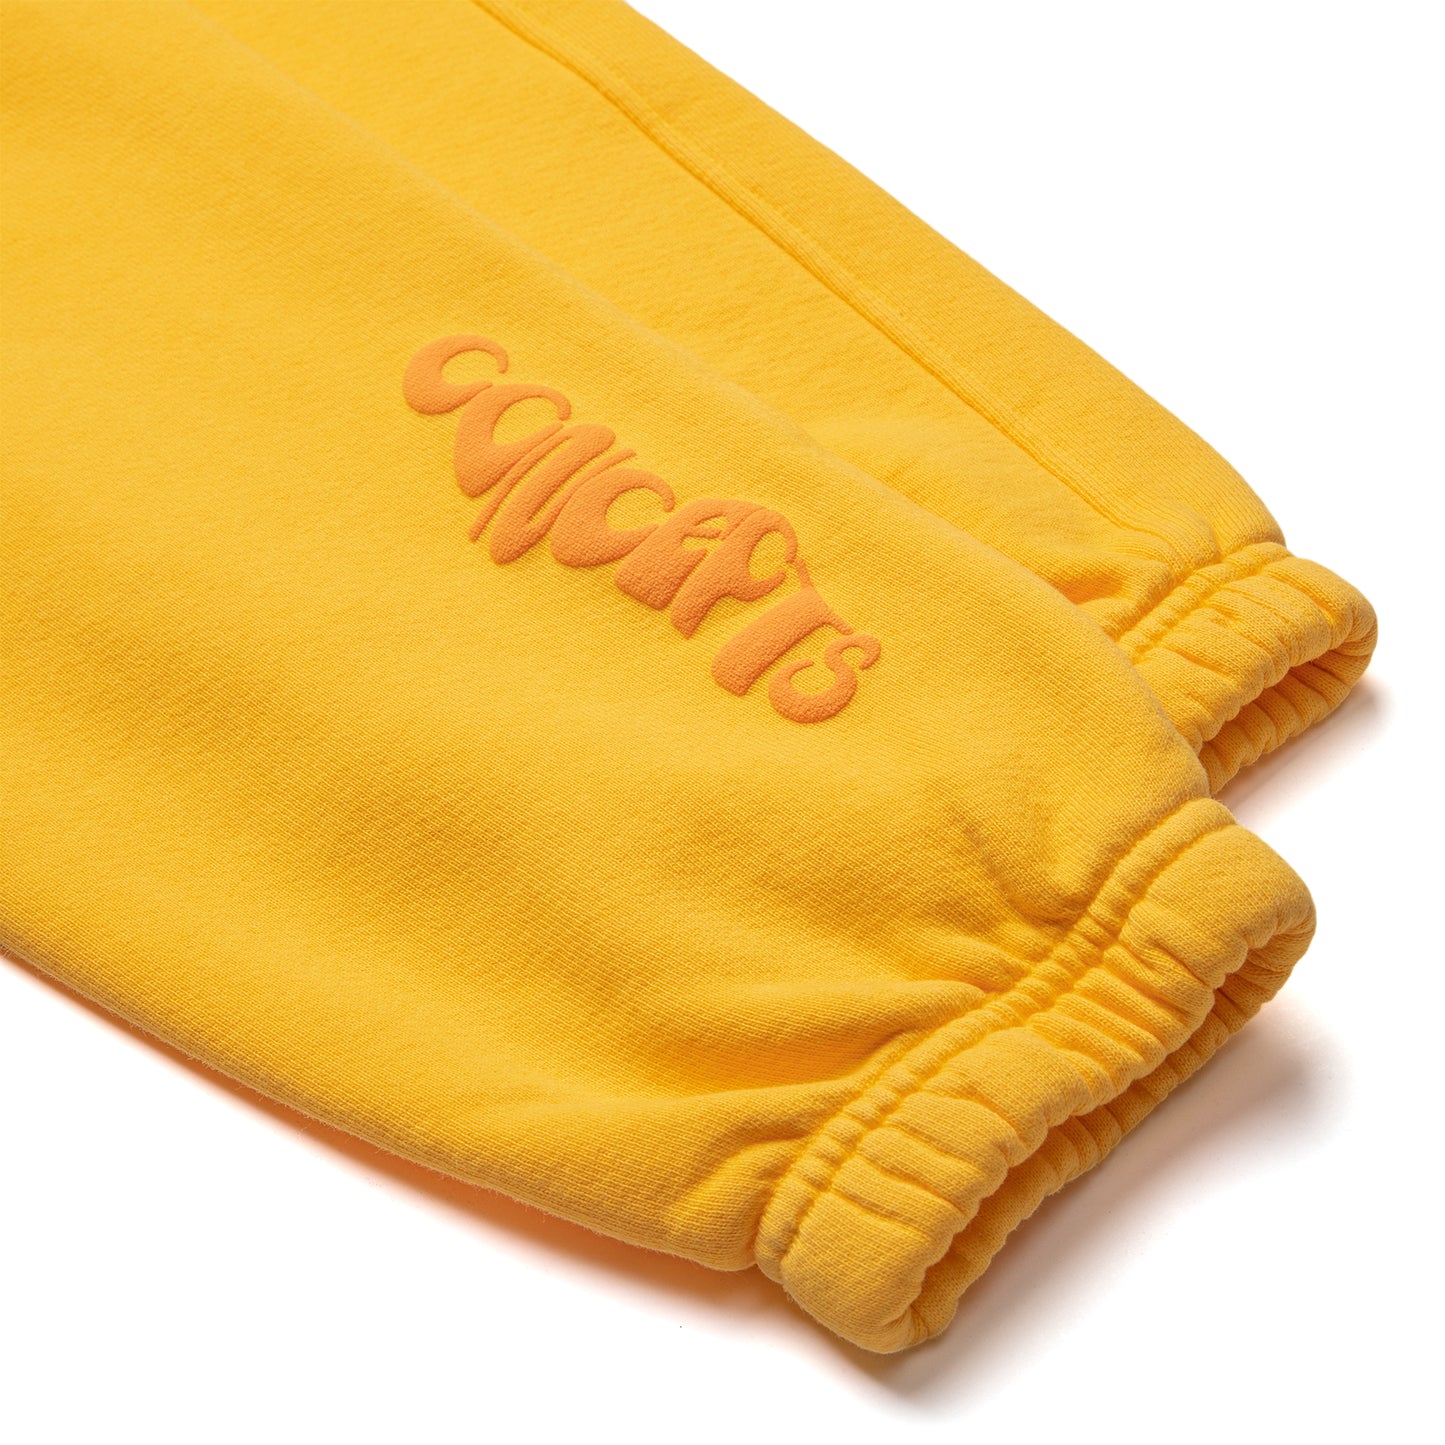 Concepts Warped Peace Sweatpants (Sunshine Yellow)